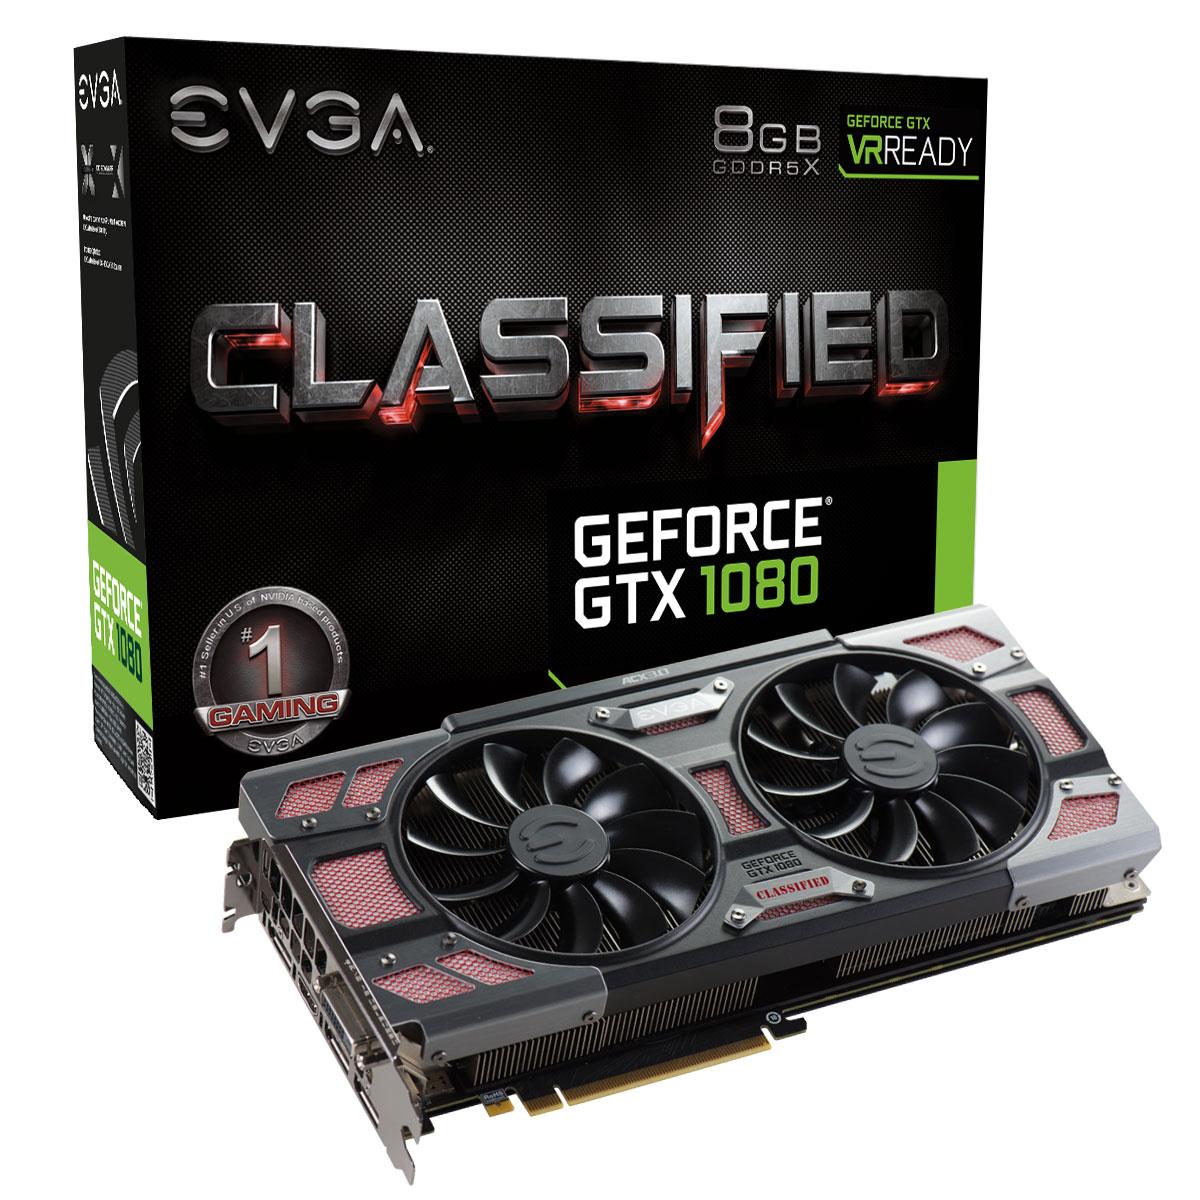 EVGA GeForce GTX 1080 8 GB Classified Gaming